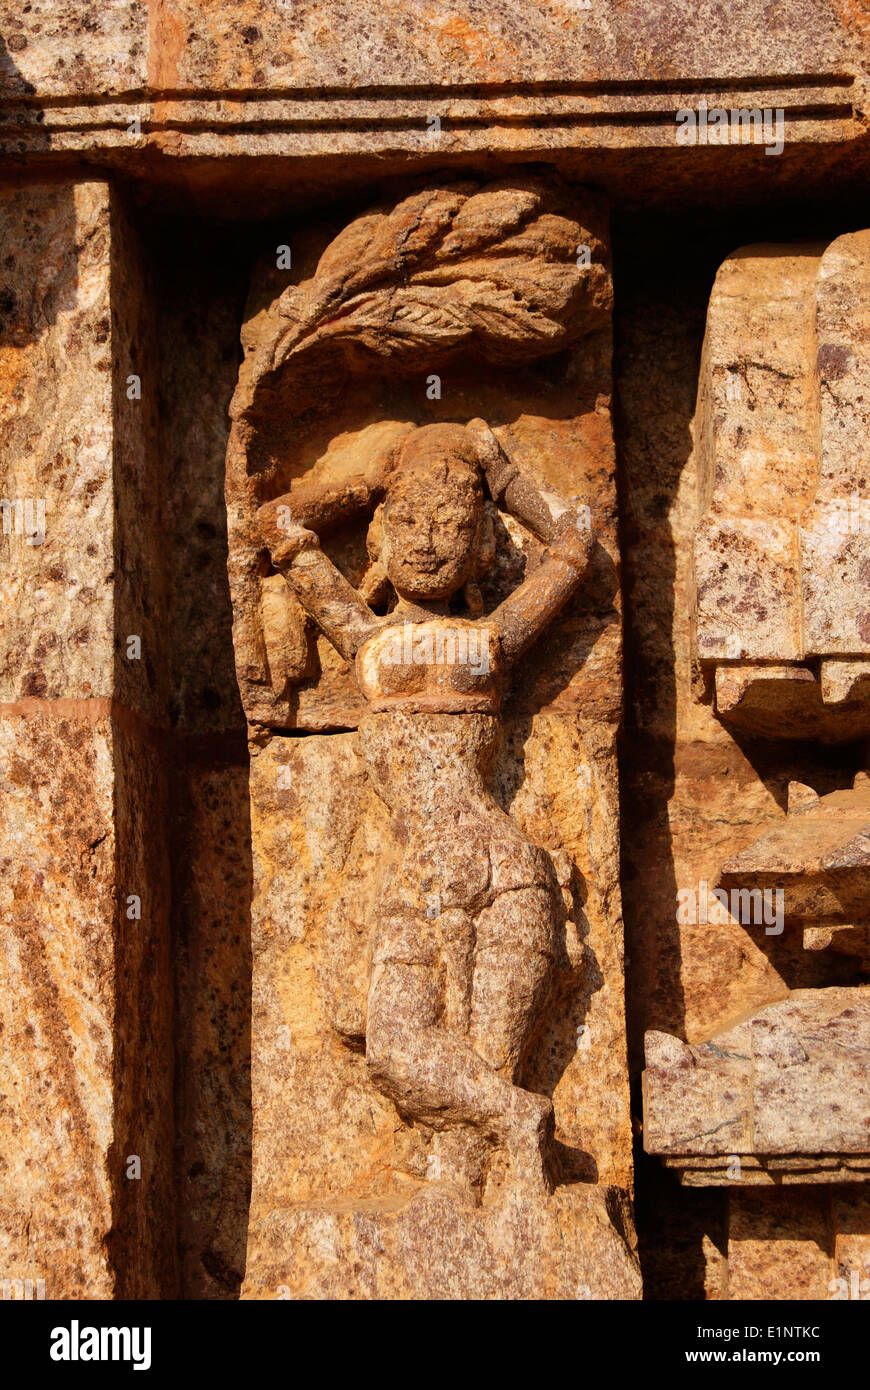 Ancient Women Stone carved Sculpture in Konark Sun Temple Walls at Odisha India Stock Photo